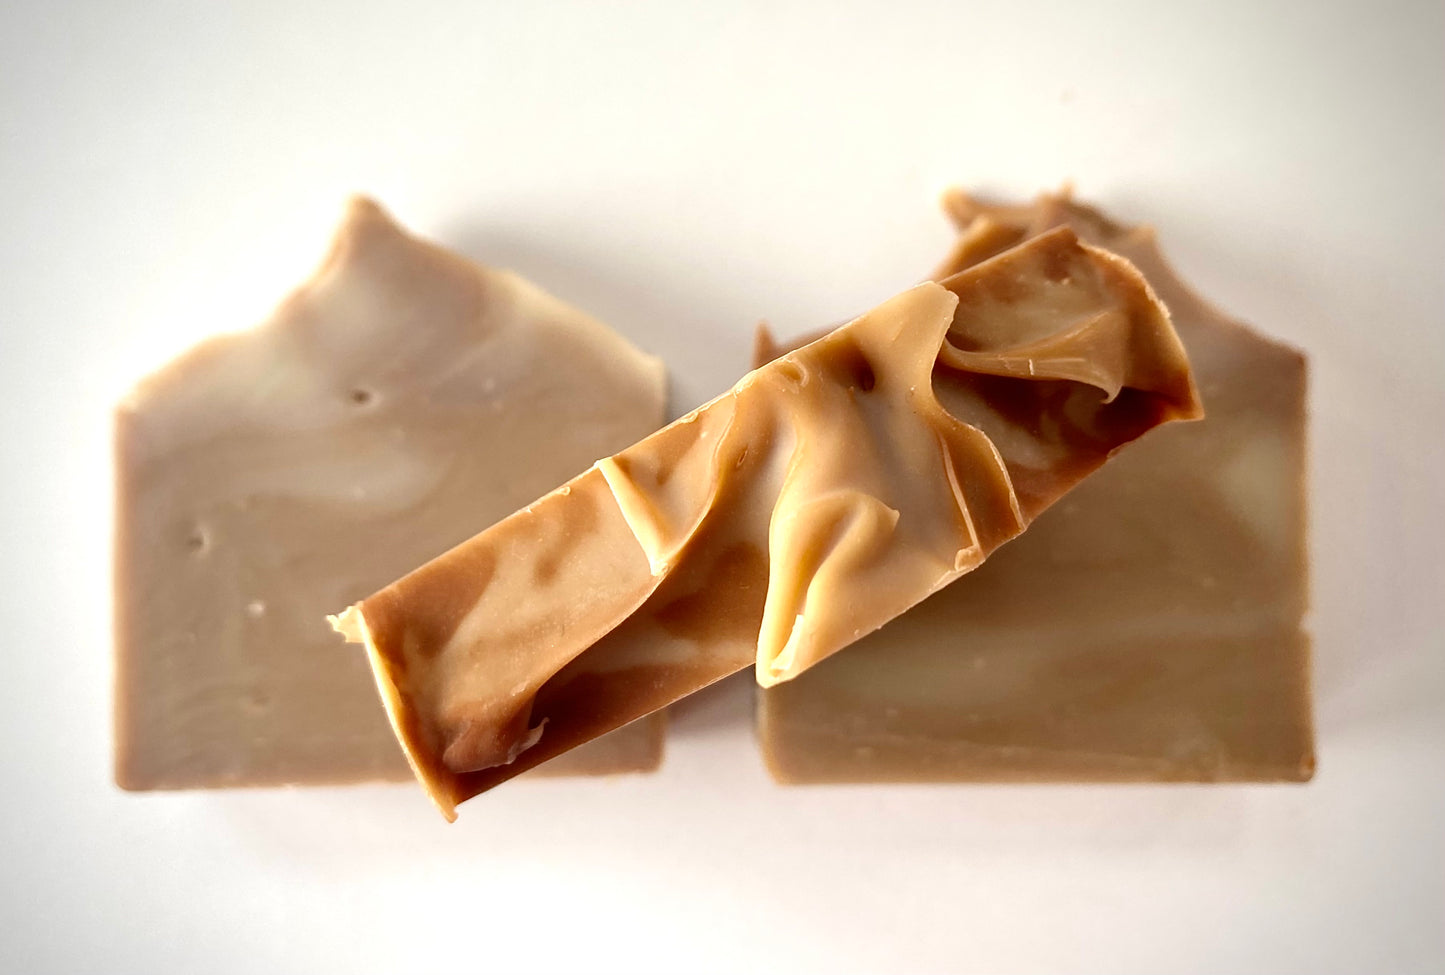 Tobacco Leaf and Amber - Body Soap